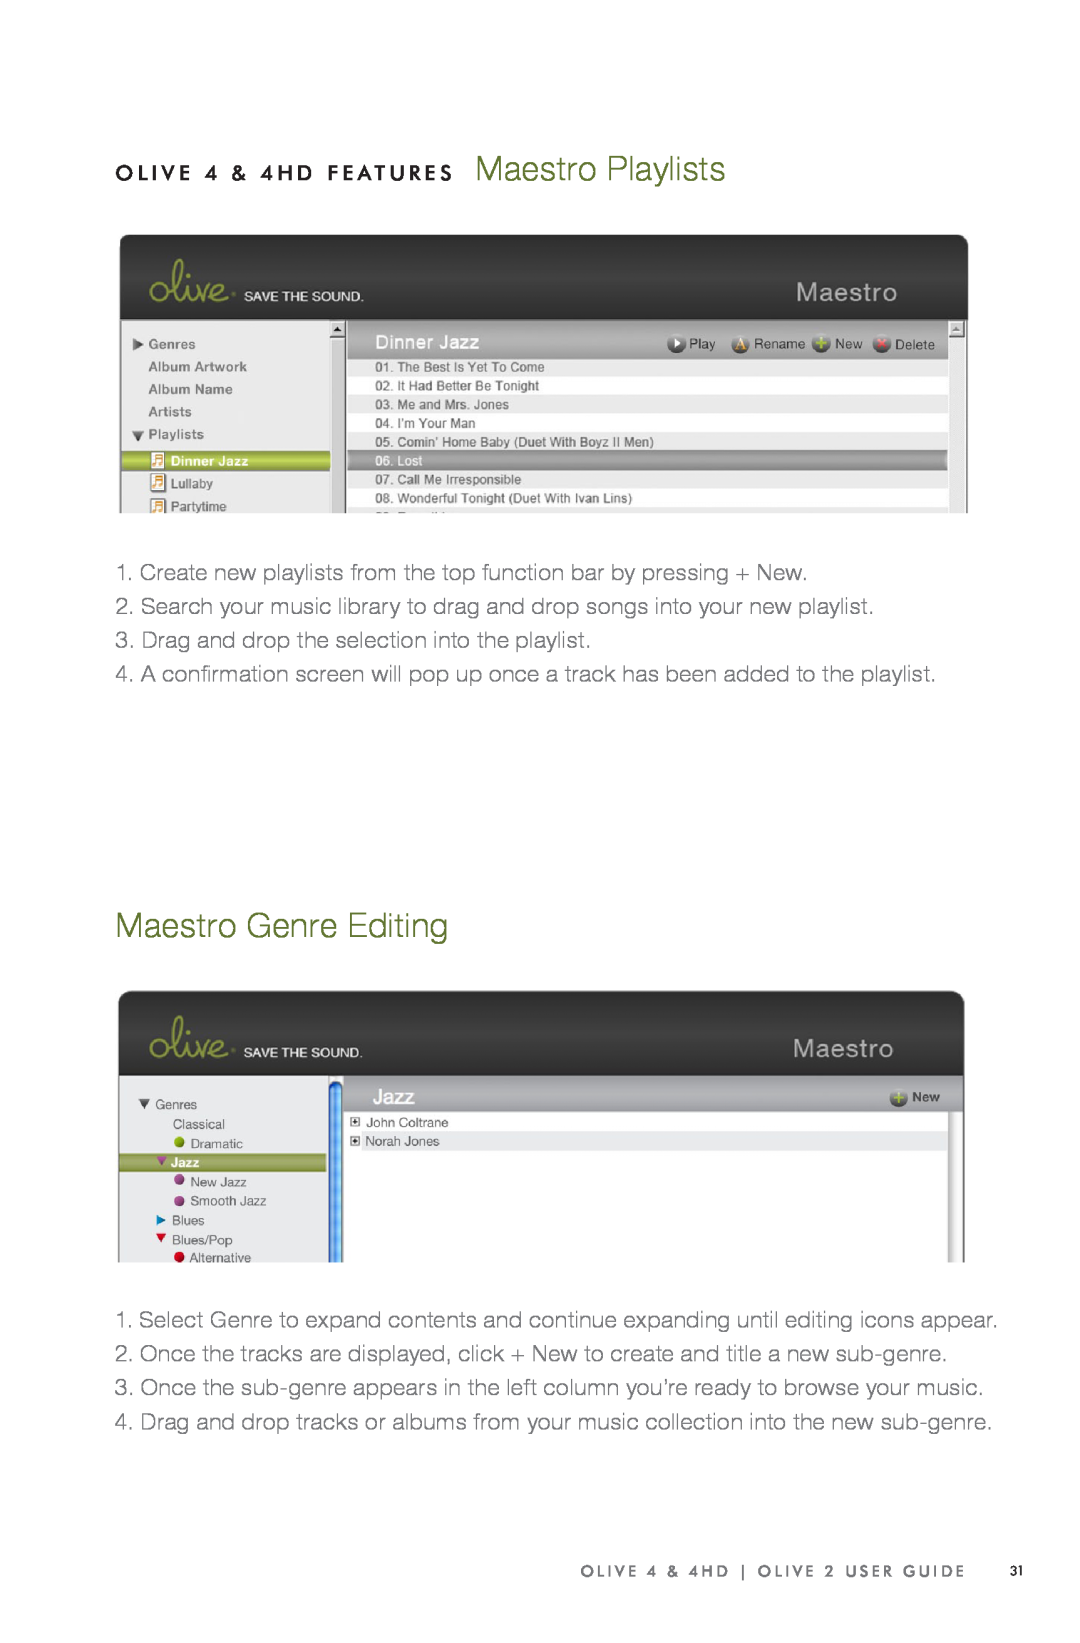 Olive Media Products 4 HD manual Maestro Genre Editing 